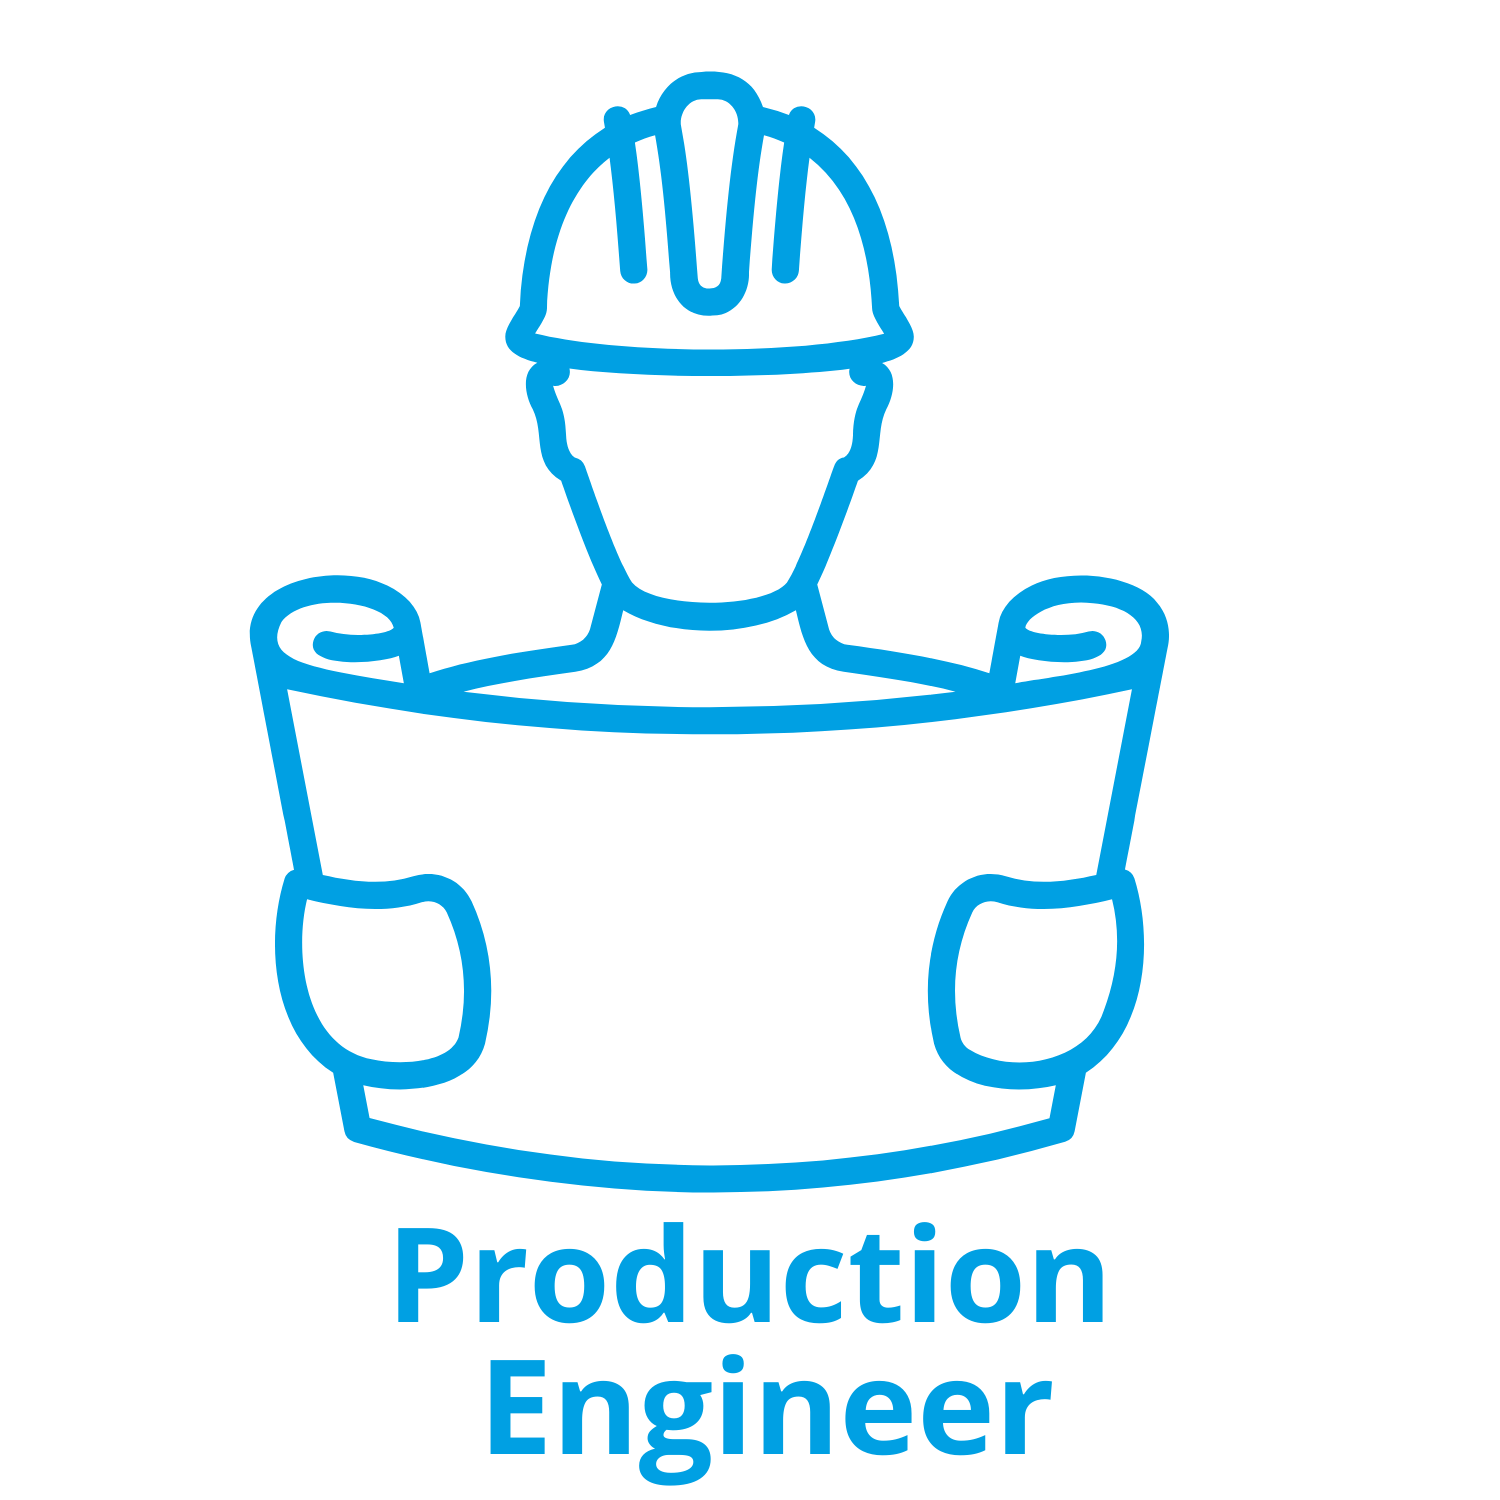 Production Engineer